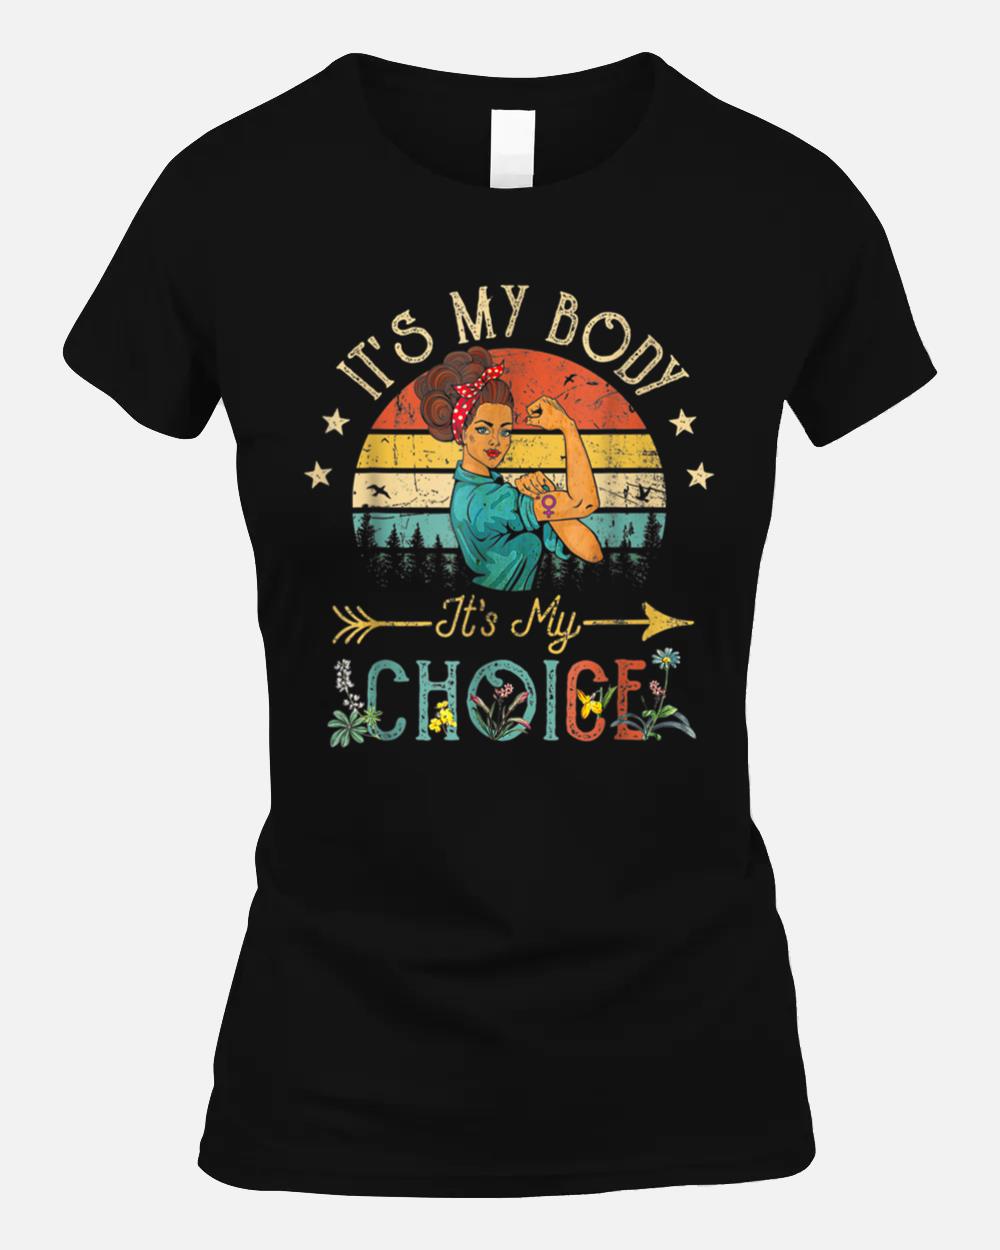 It's My Body, Choice Feminist Womens Floral Feminist Retro Unisex T-Shirt